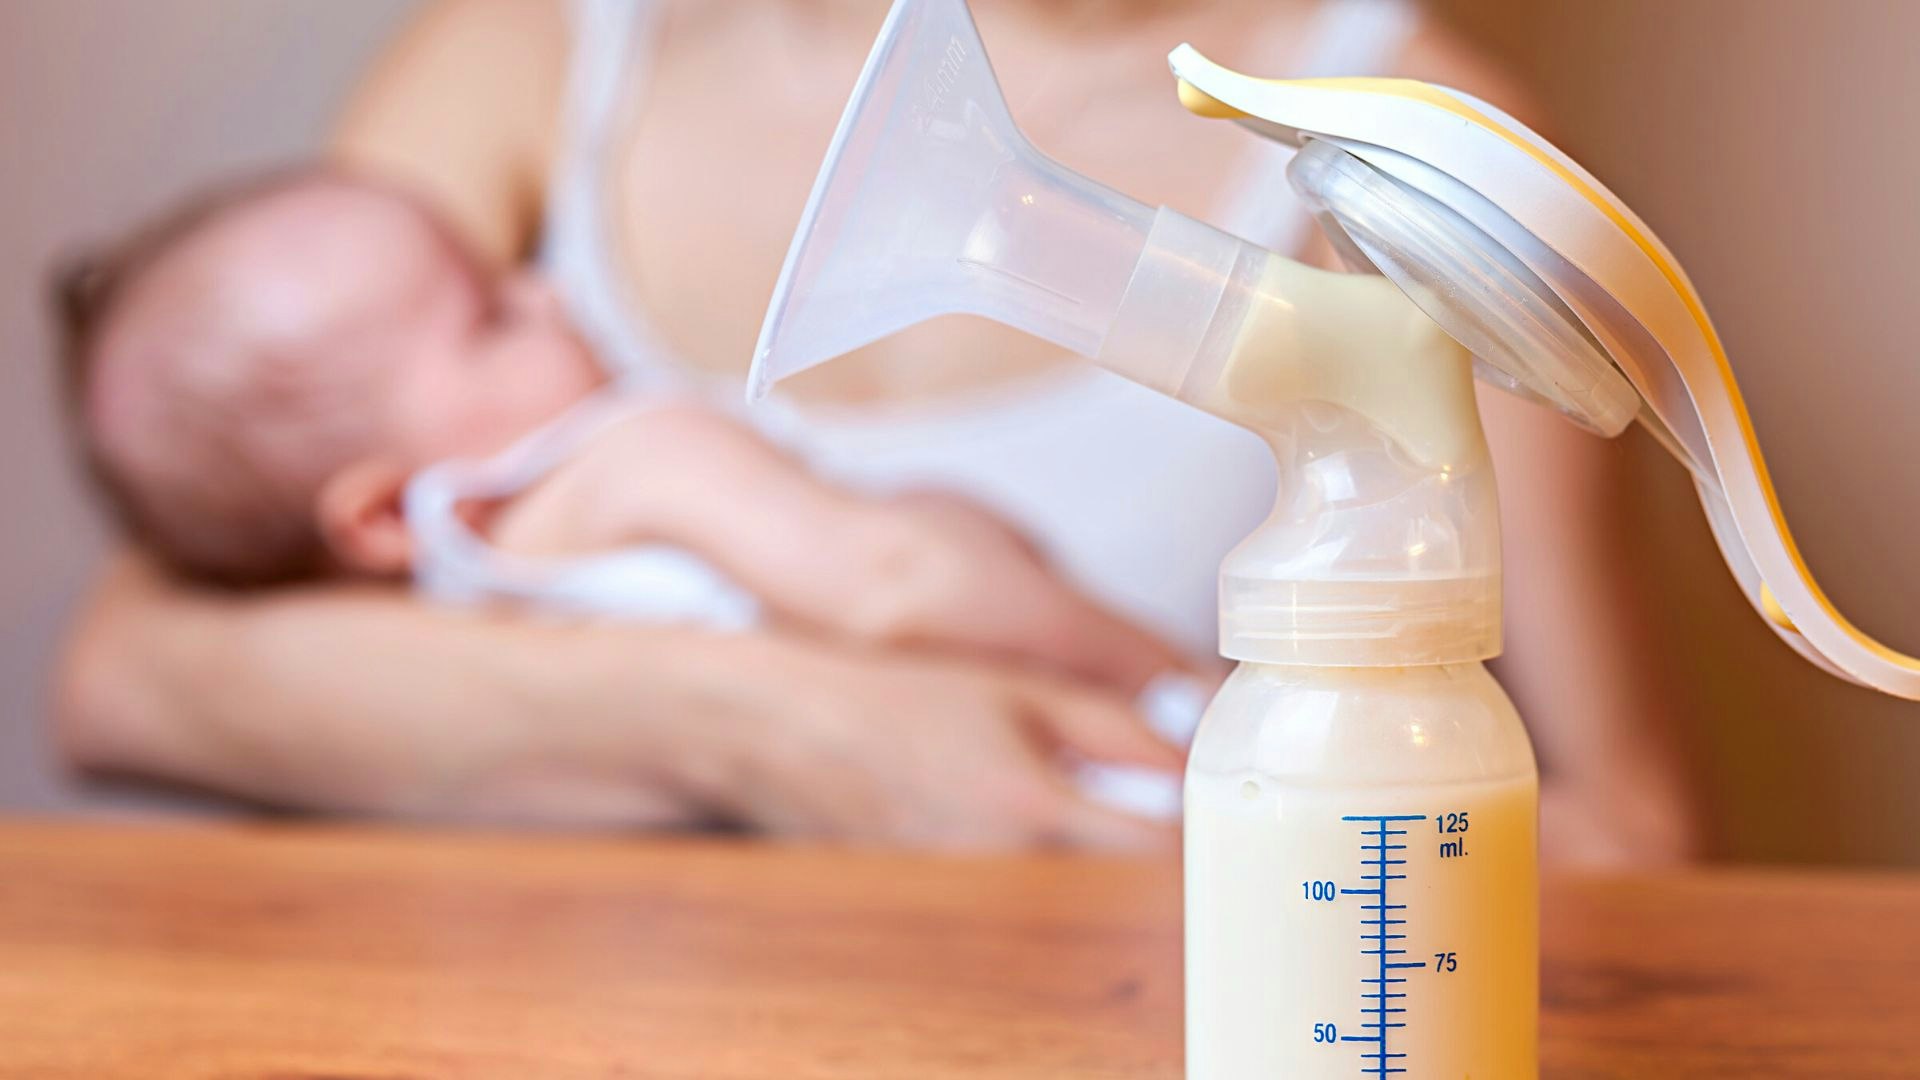 Mam - Manual Breast Pump and Breastfeeding Kit